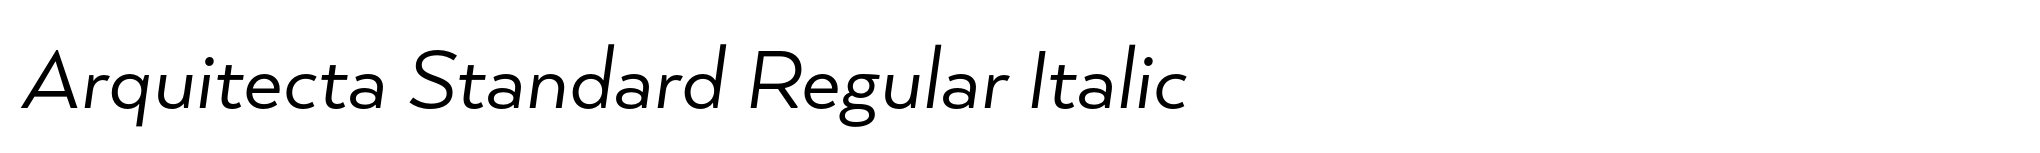 Arquitecta Standard Regular Italic image